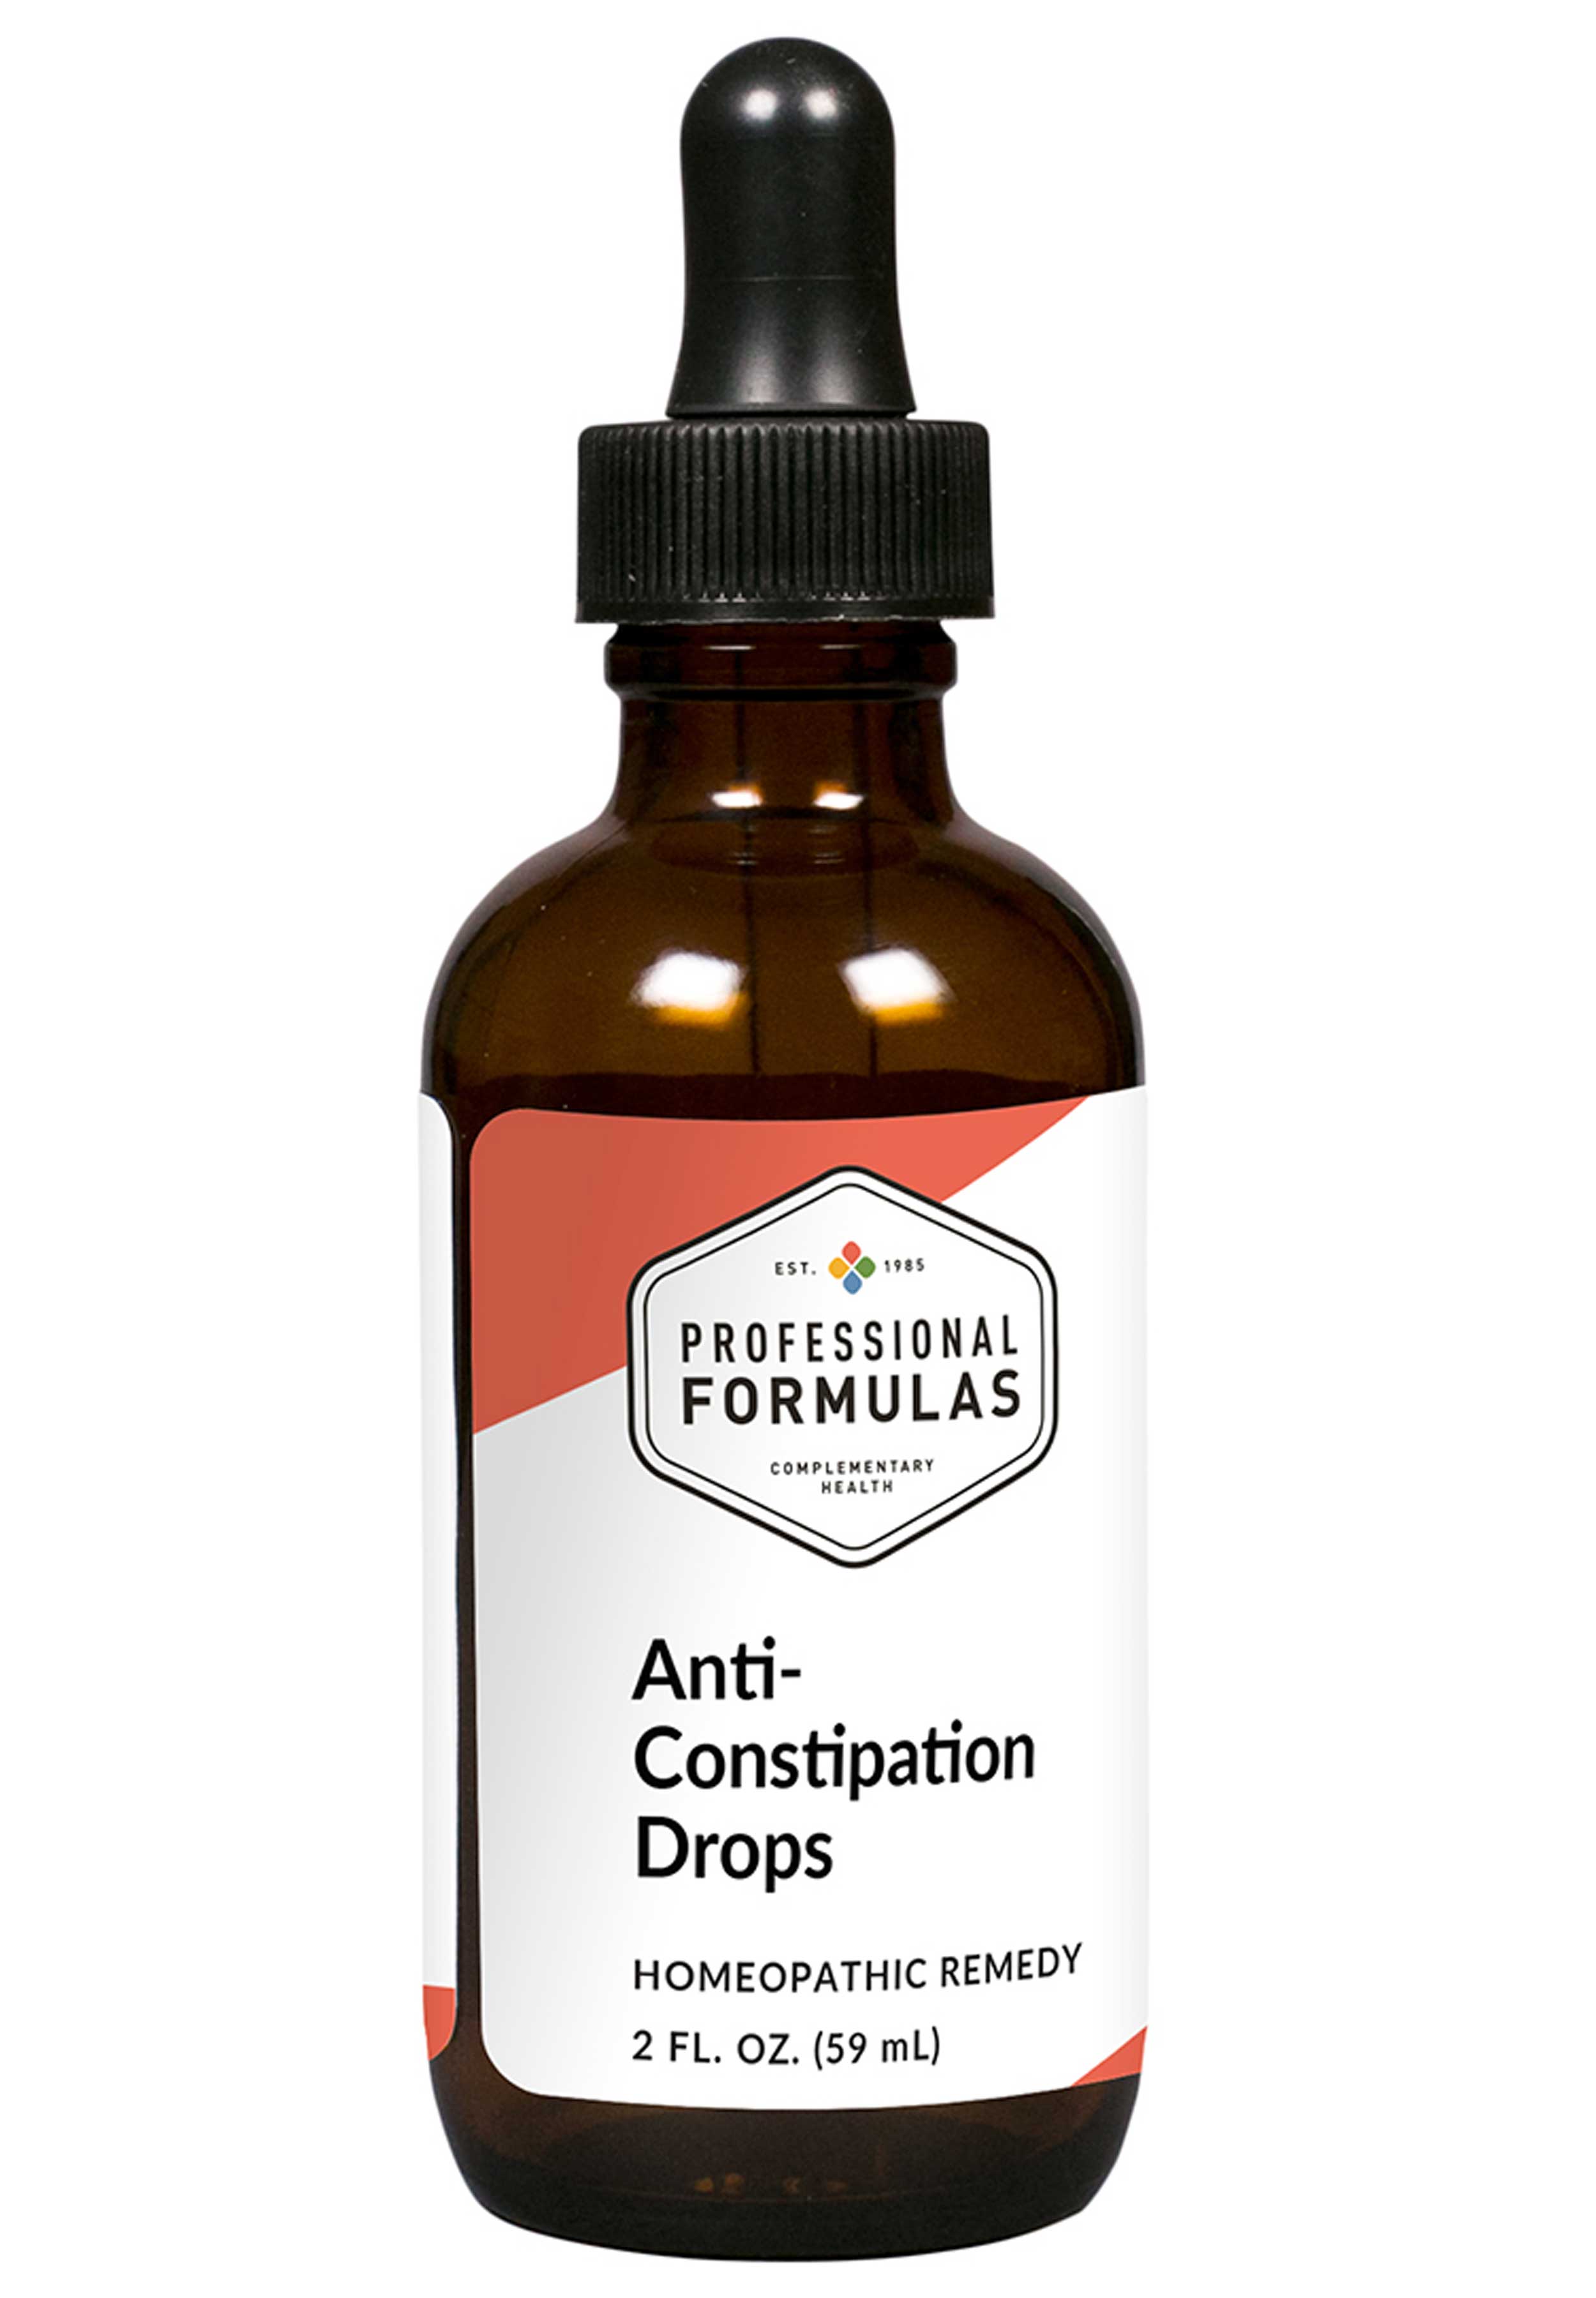 Professional Formulas Anti-Constipation Drops